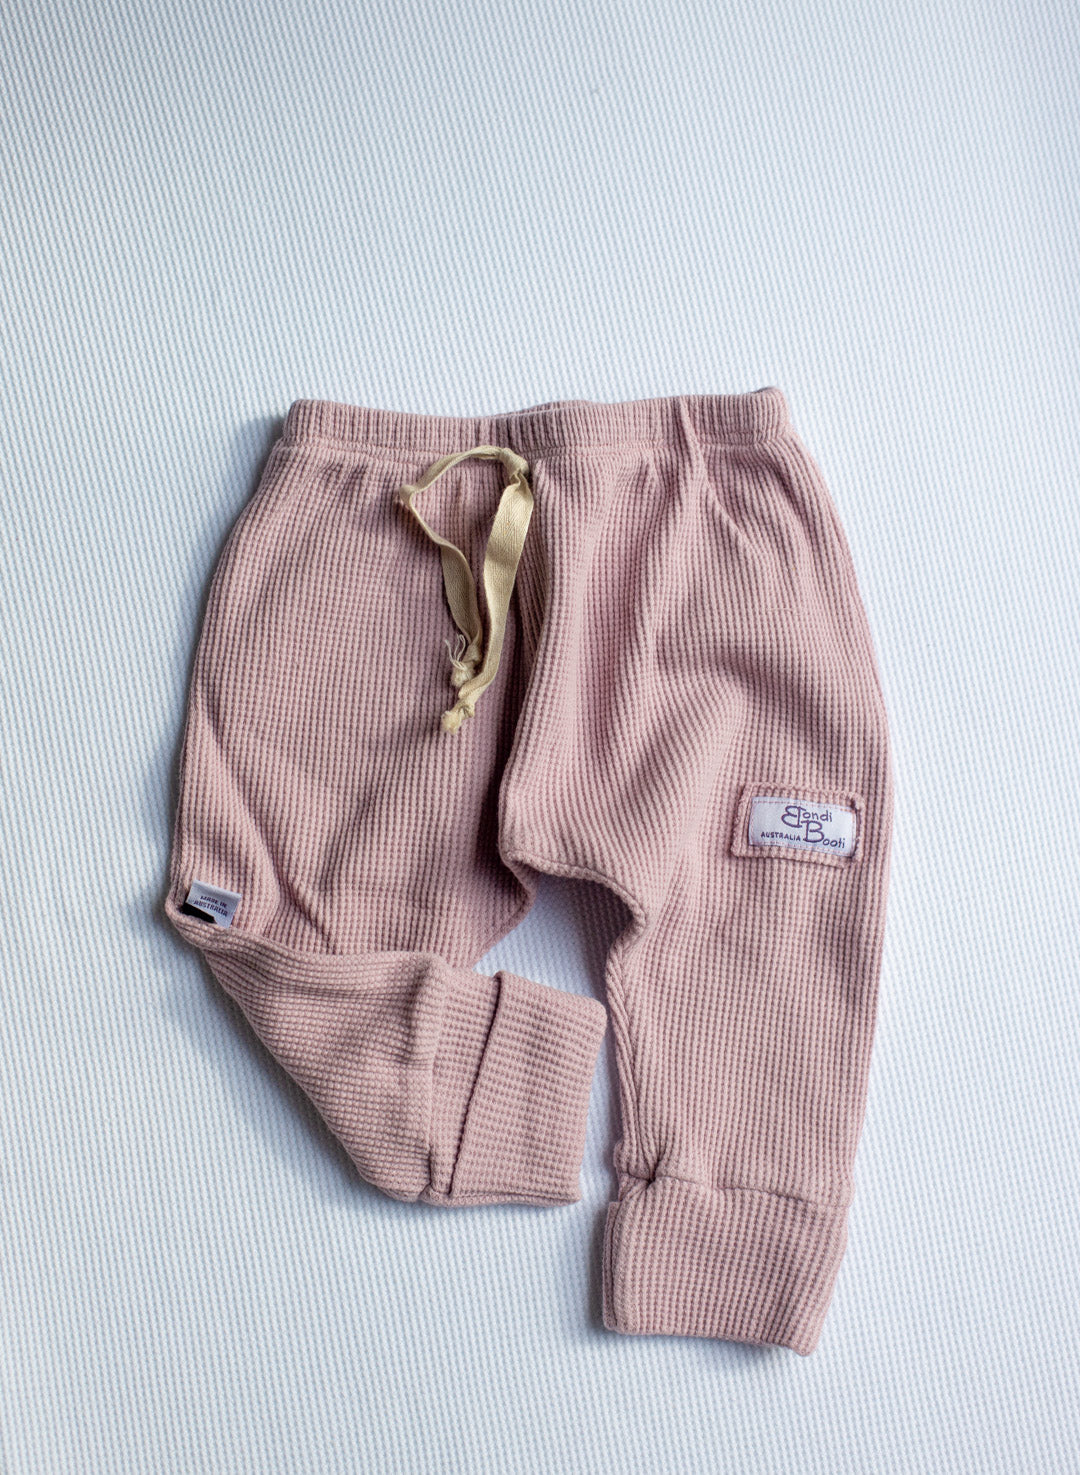 Ribbed pants newborn baby toddler pink